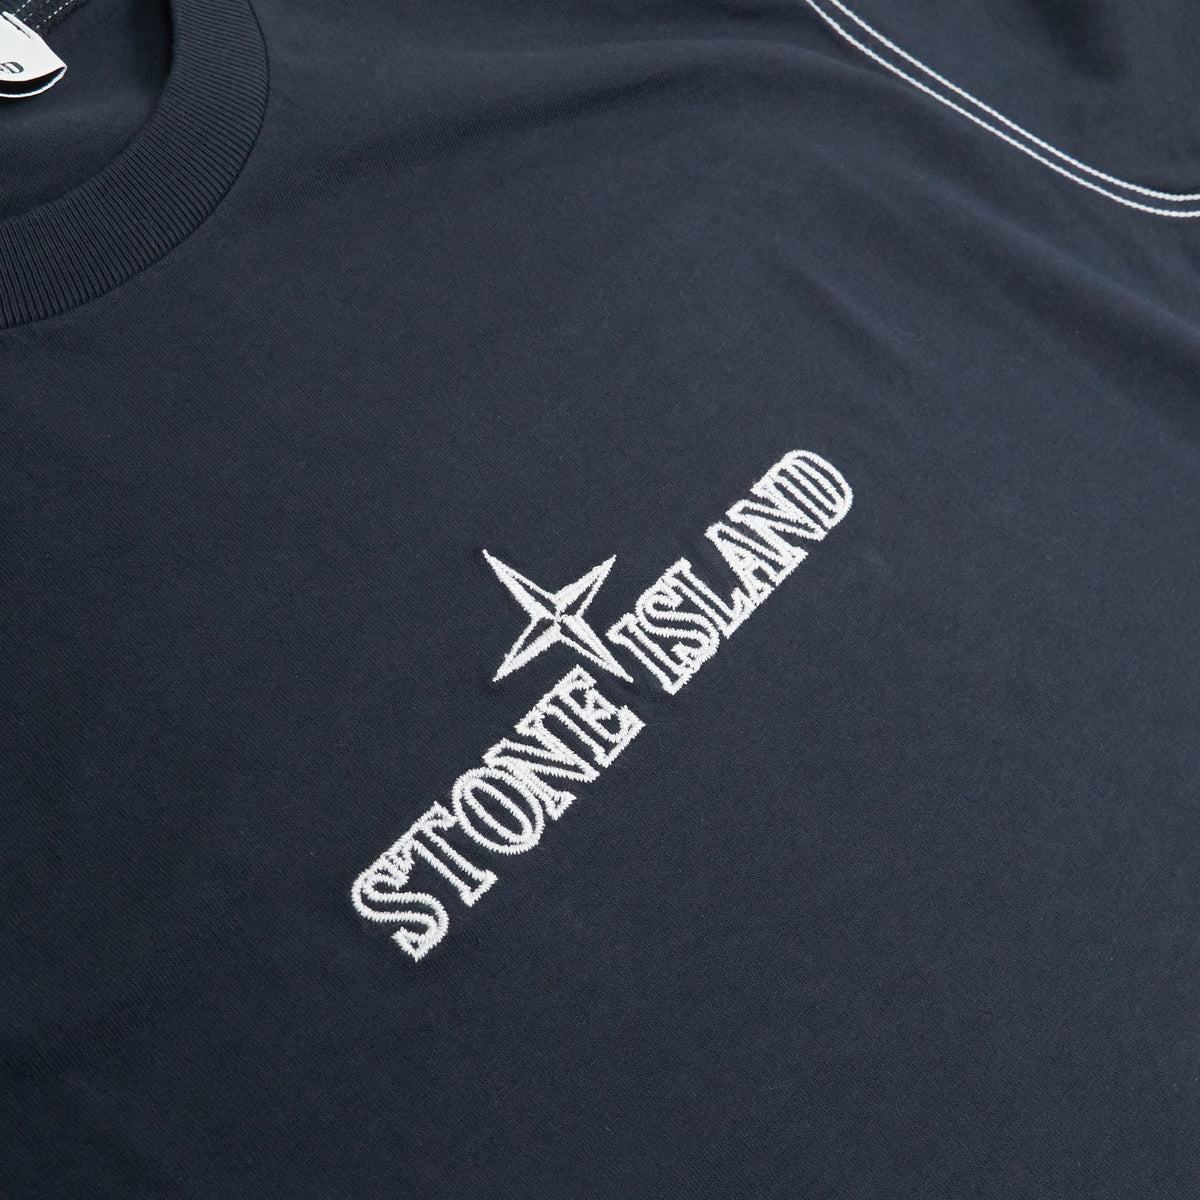 Stone Island Embroidered Image Crew Neck T-Shirt